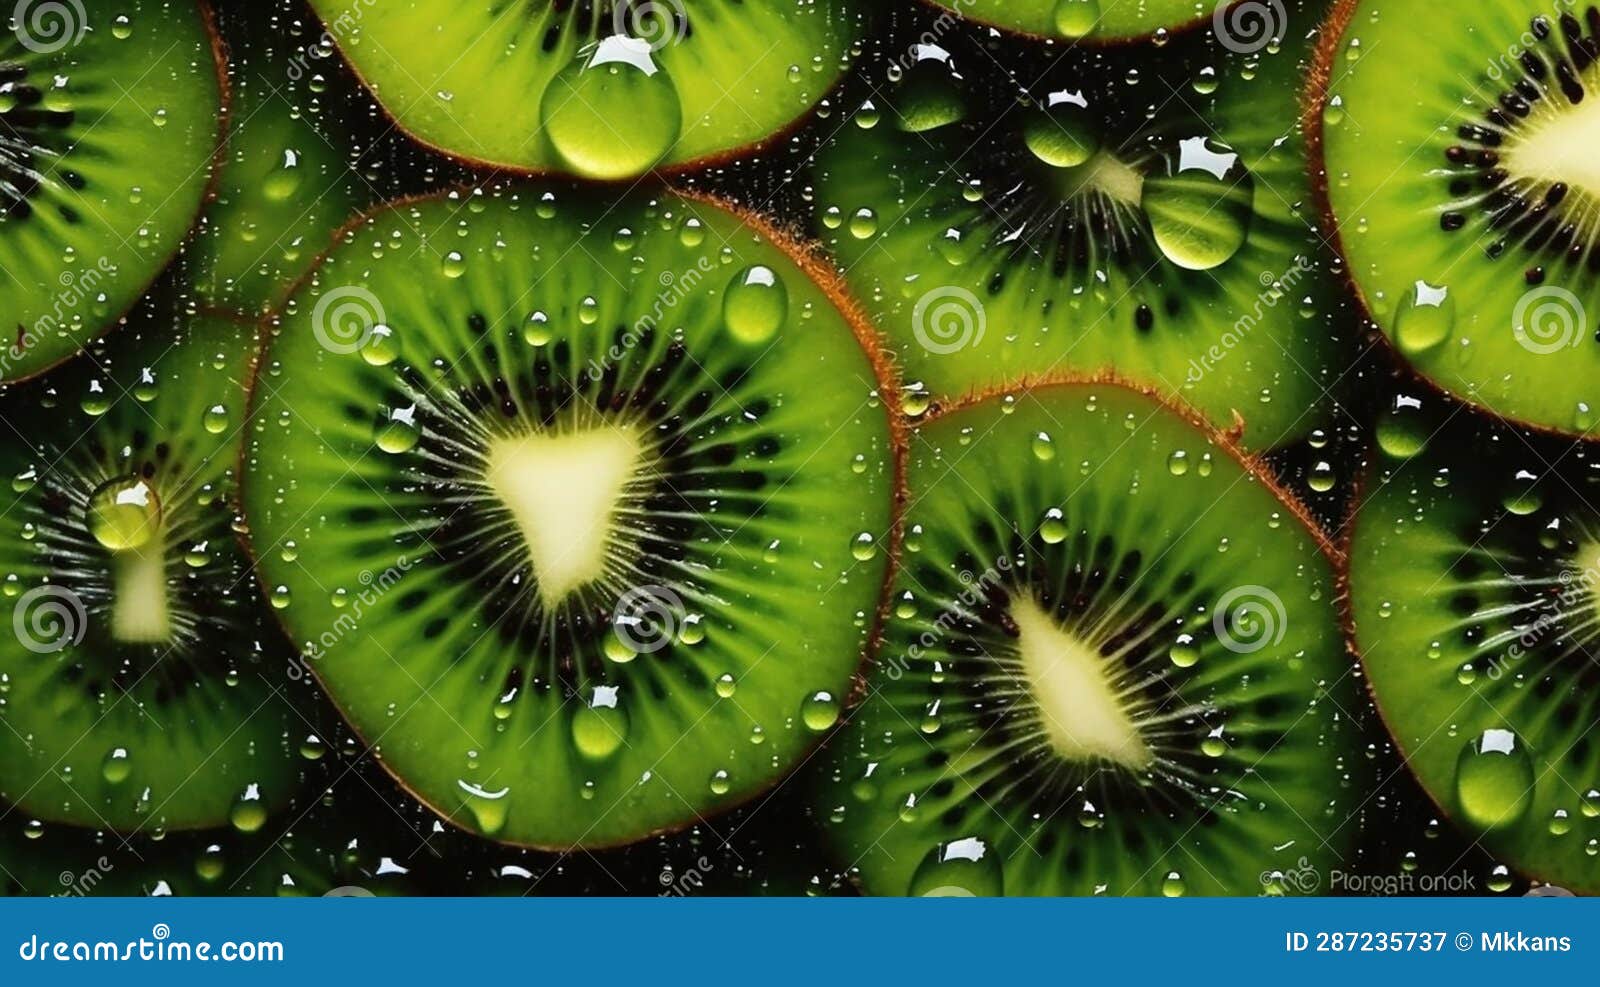 beautiful kiwi with dew droplets